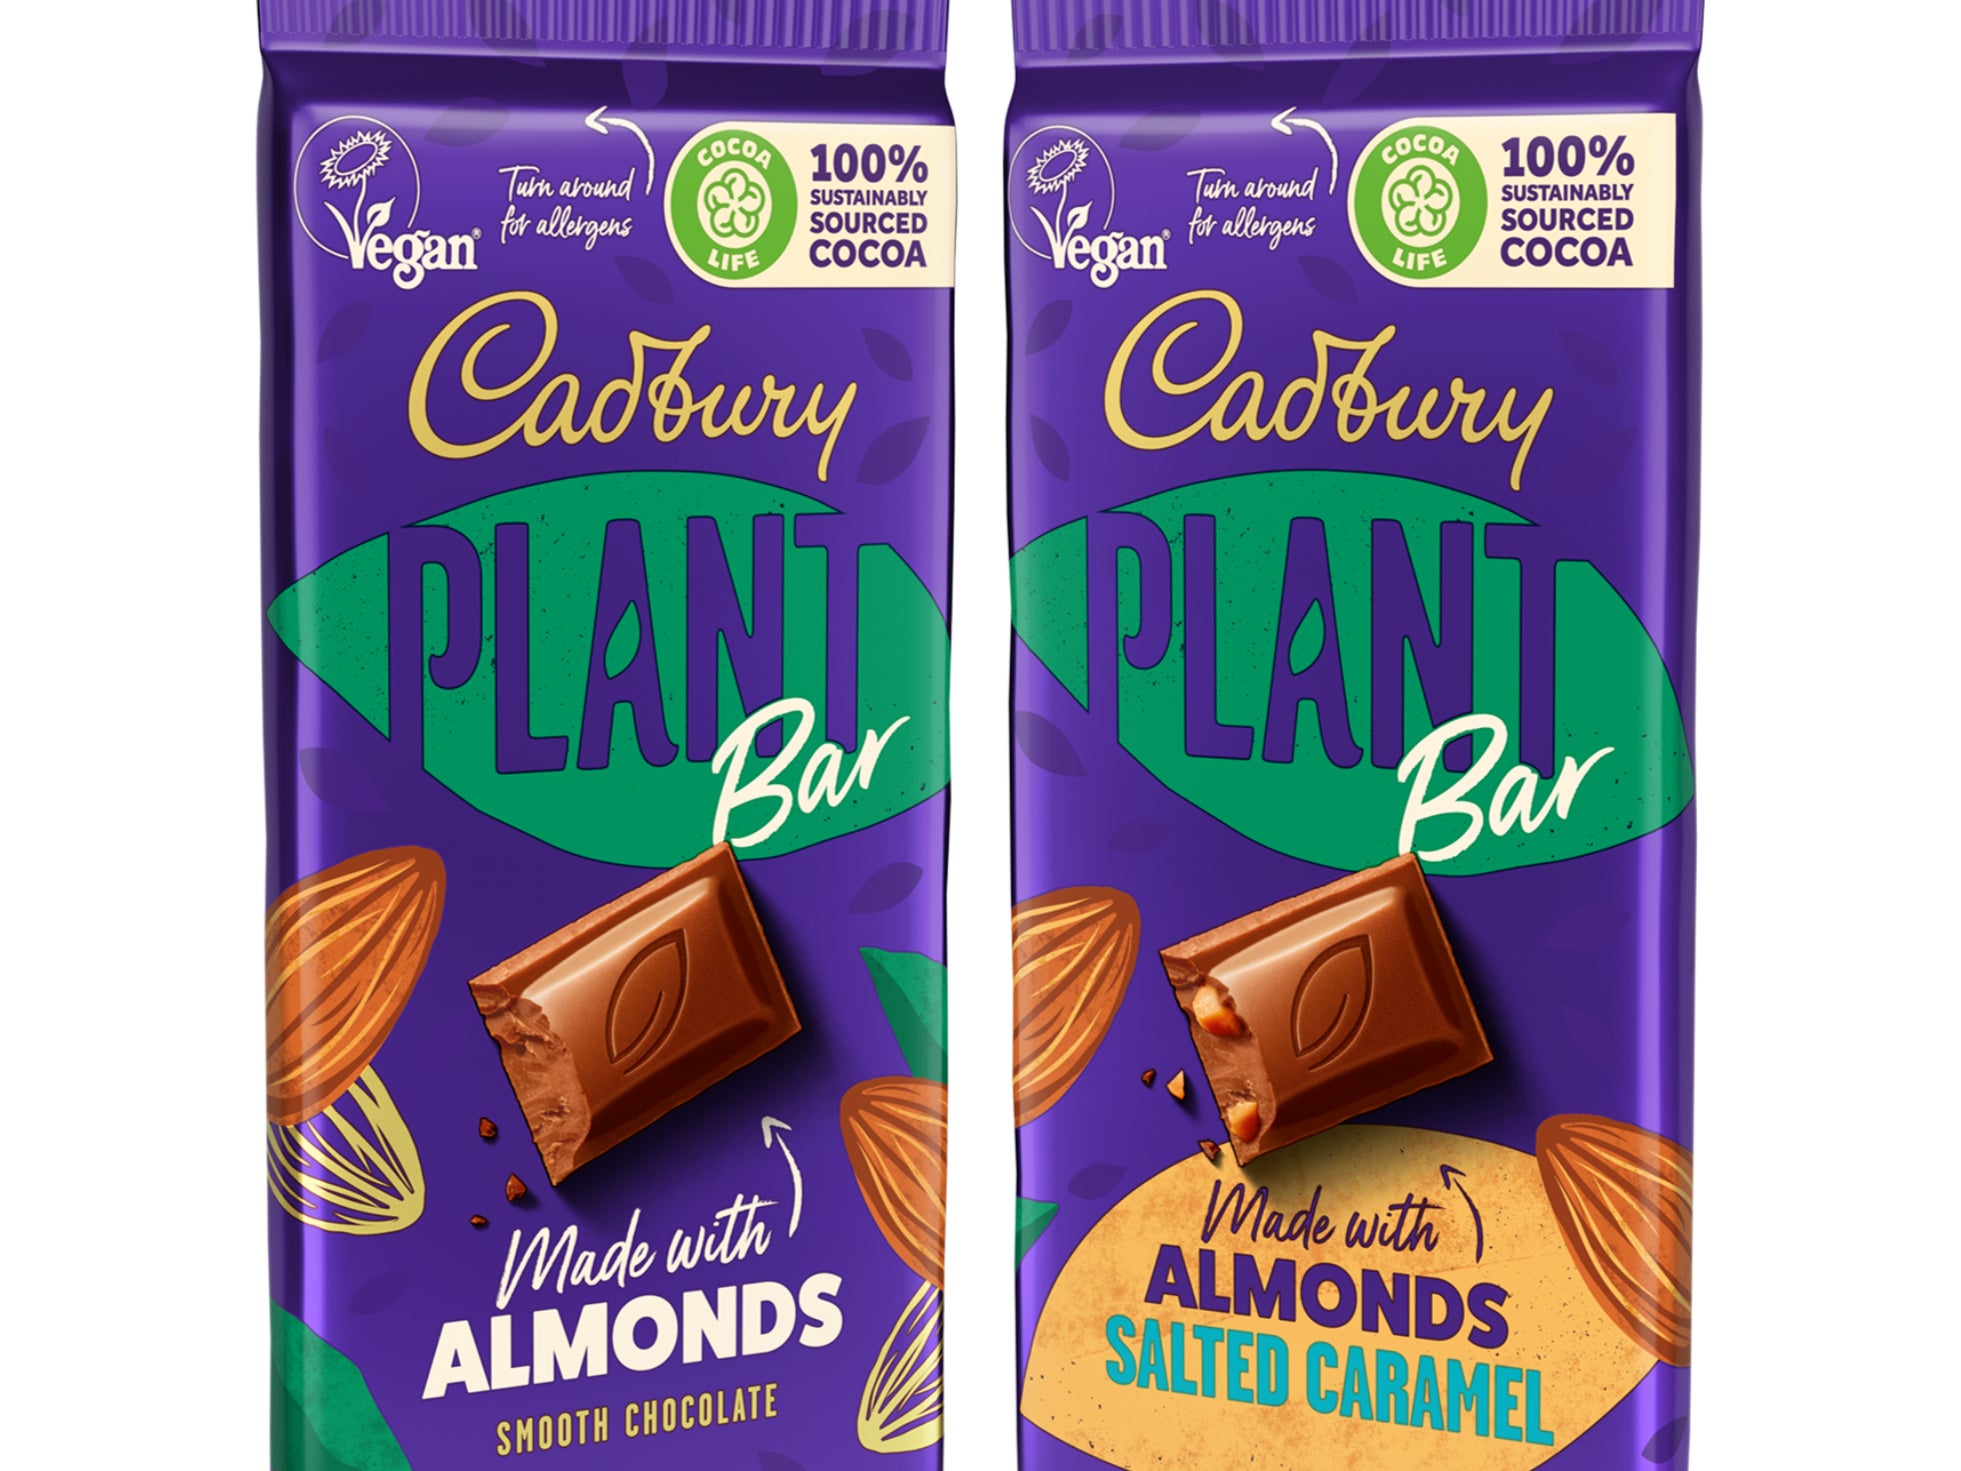 Cadbury announces launch of its first vegan chocolate bar